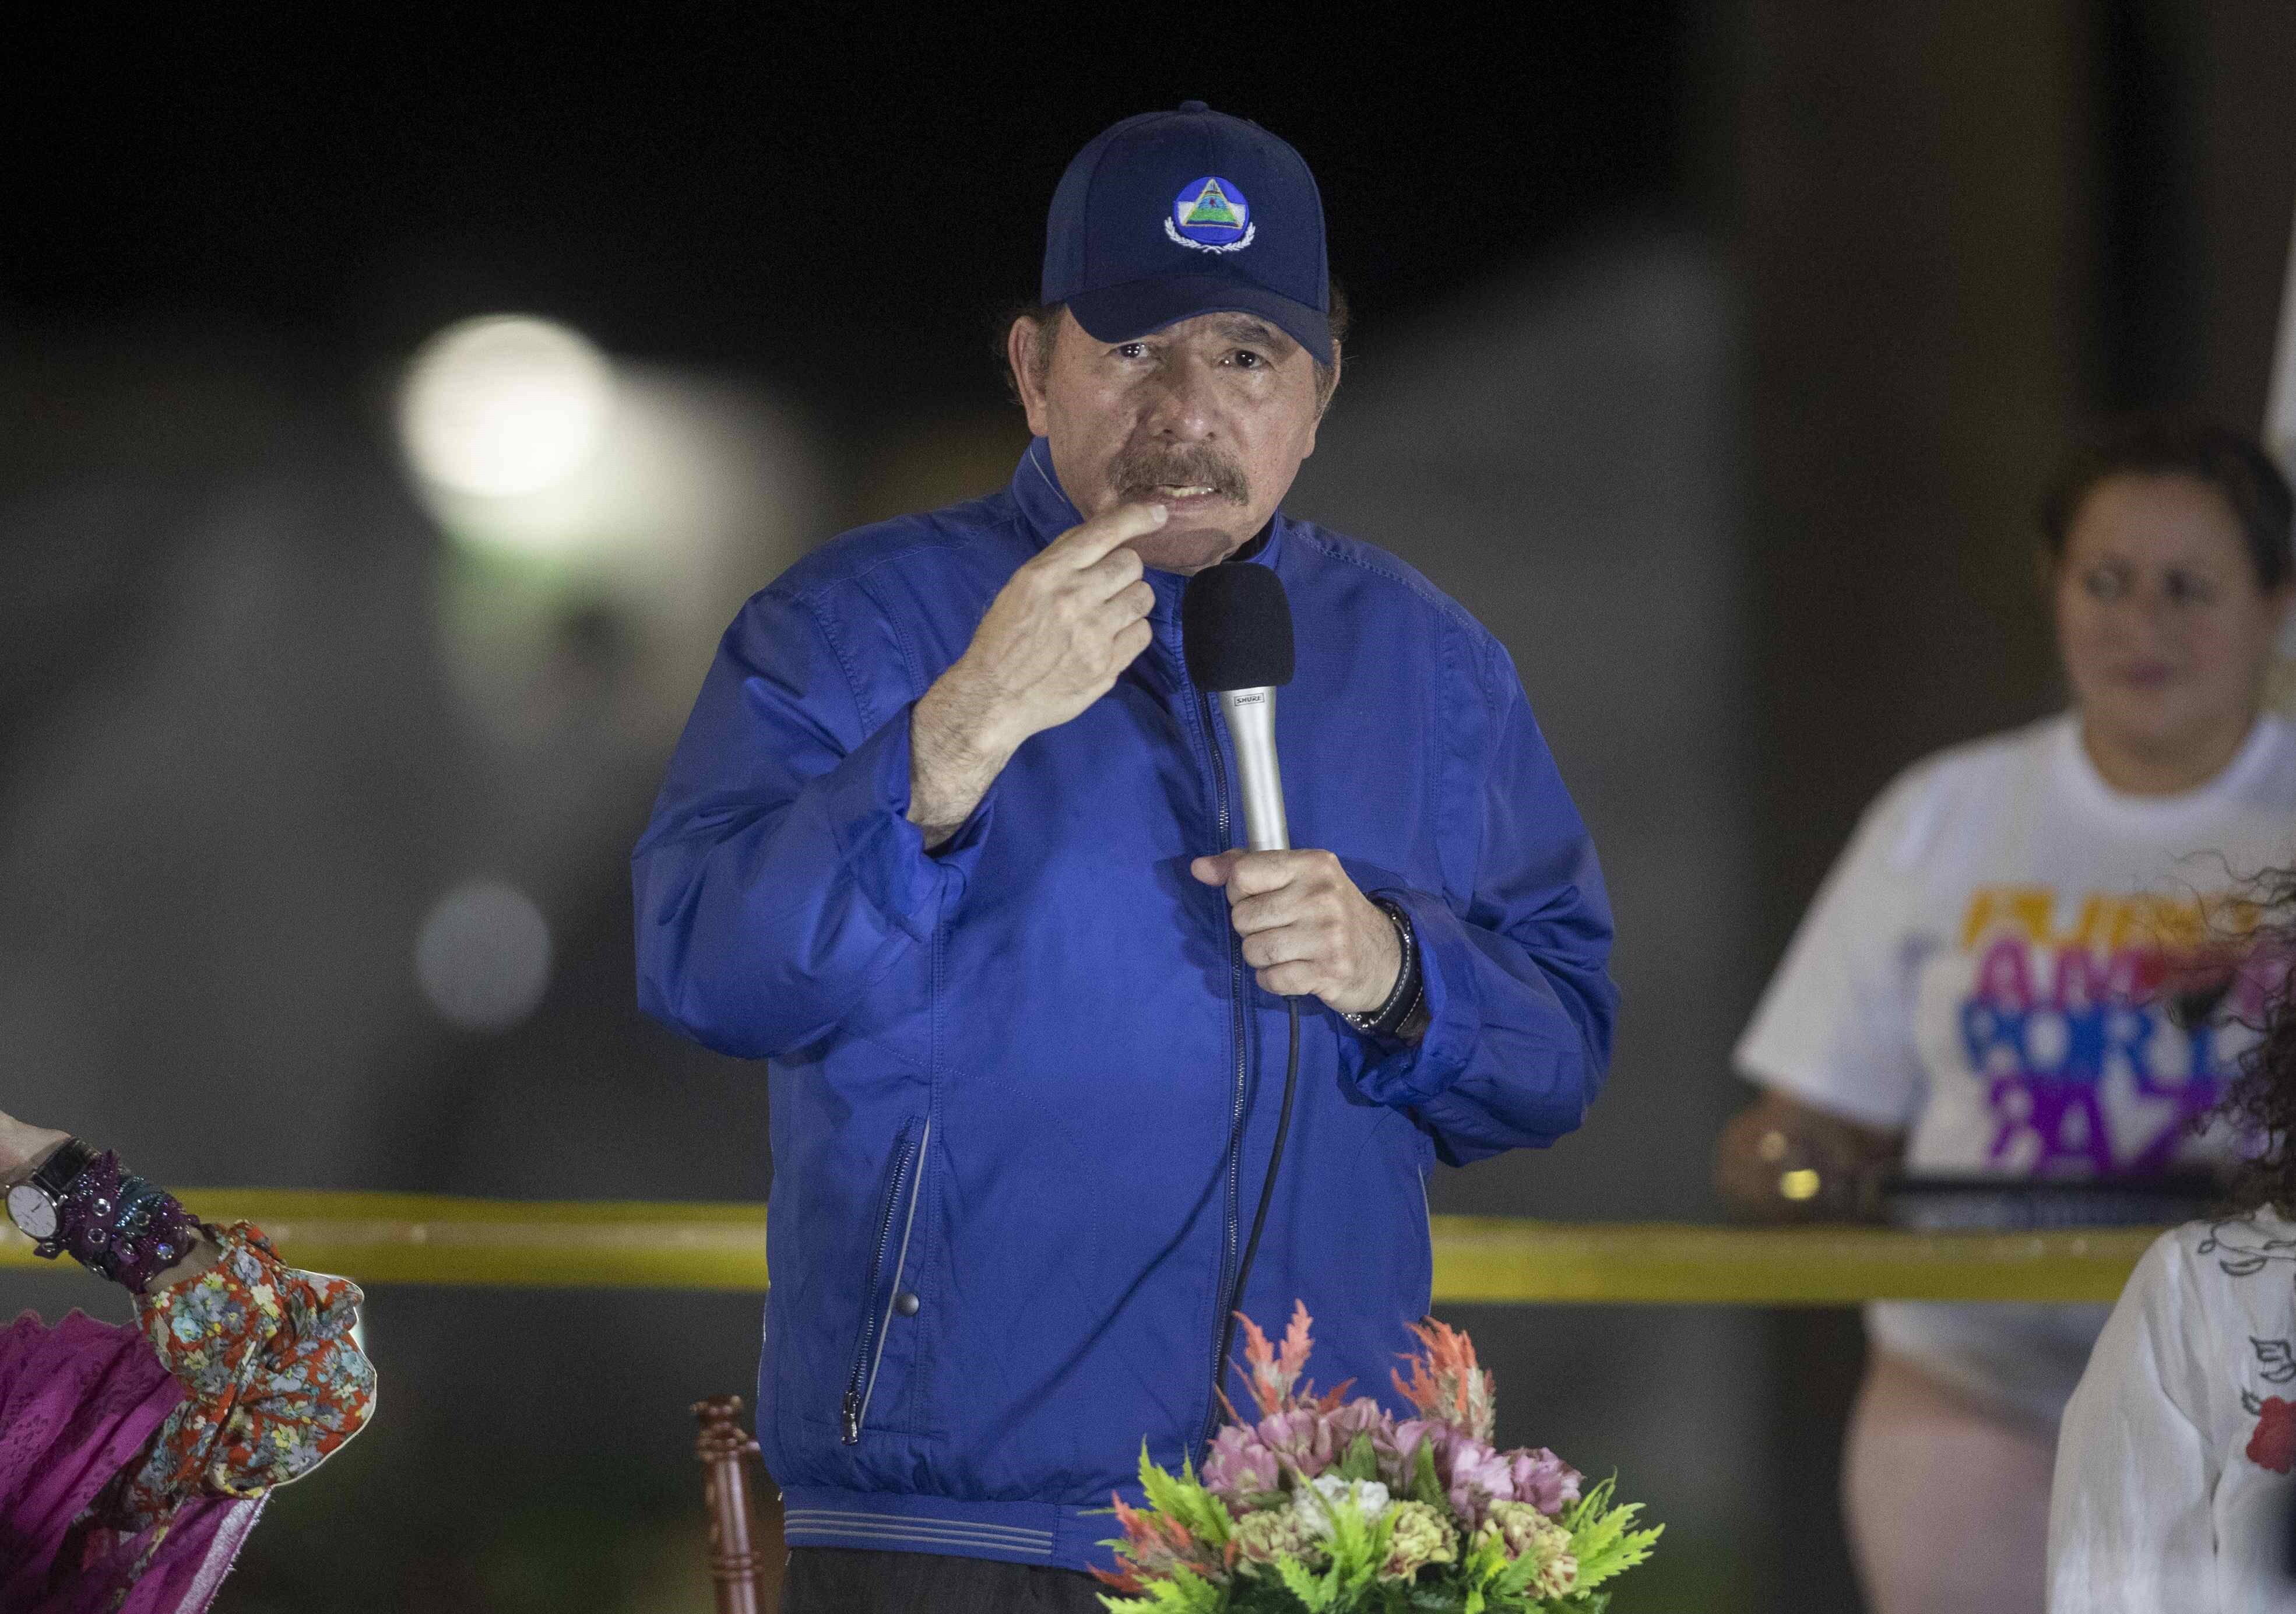 Un obispo inició una huelga de hambre en protesta contra la persecución del régimen de Ortega en Nicaragua